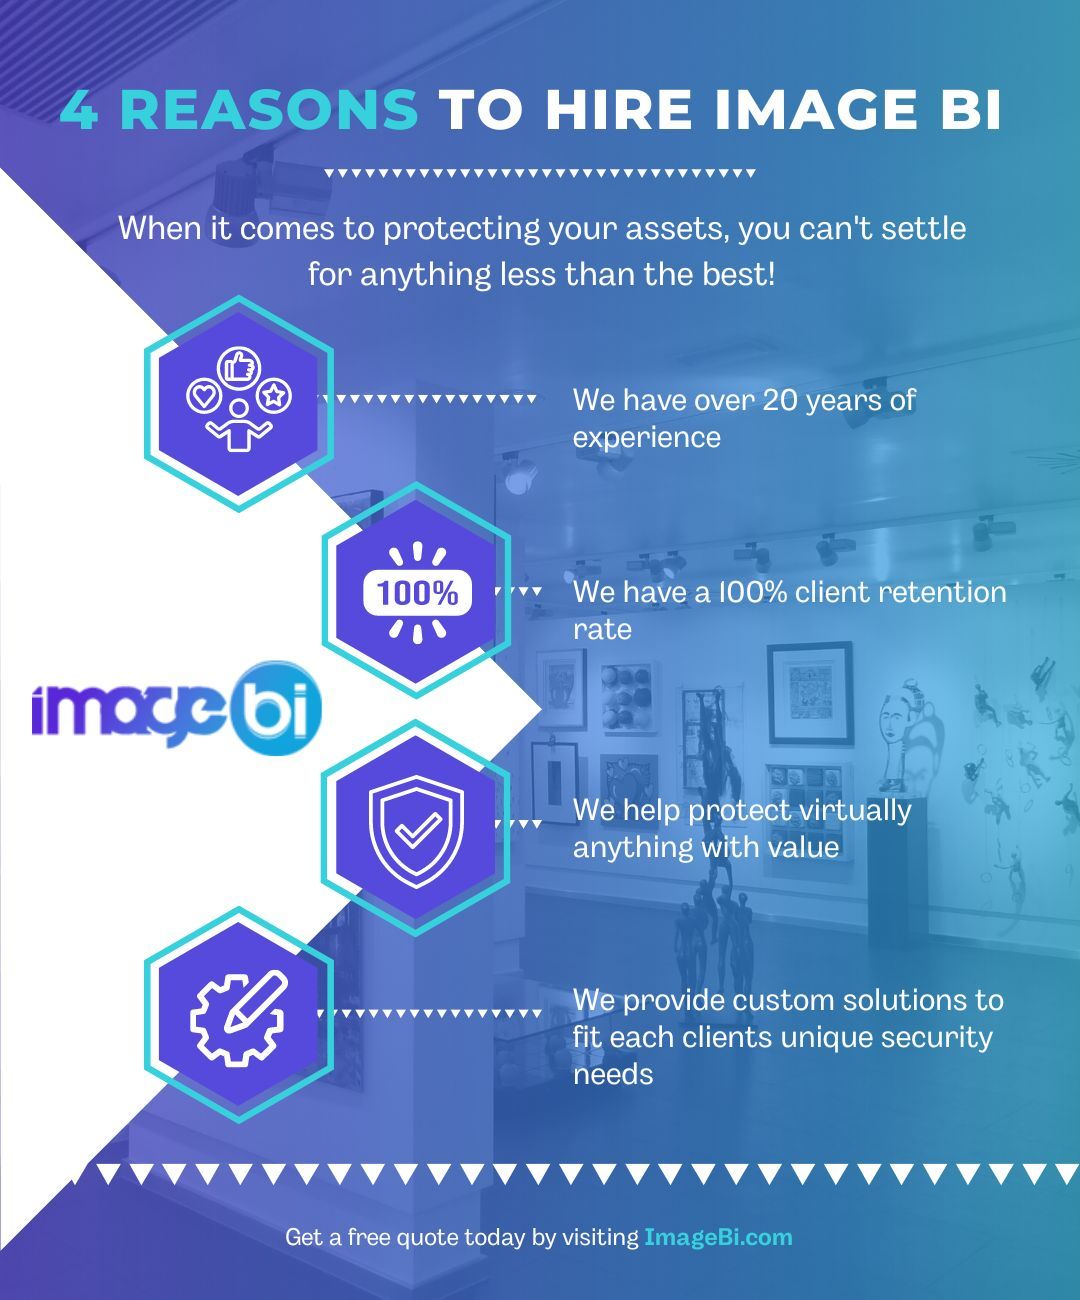 M36277 - Image BI - 4 Reasons To Hire Image BI - Infographic.jpg